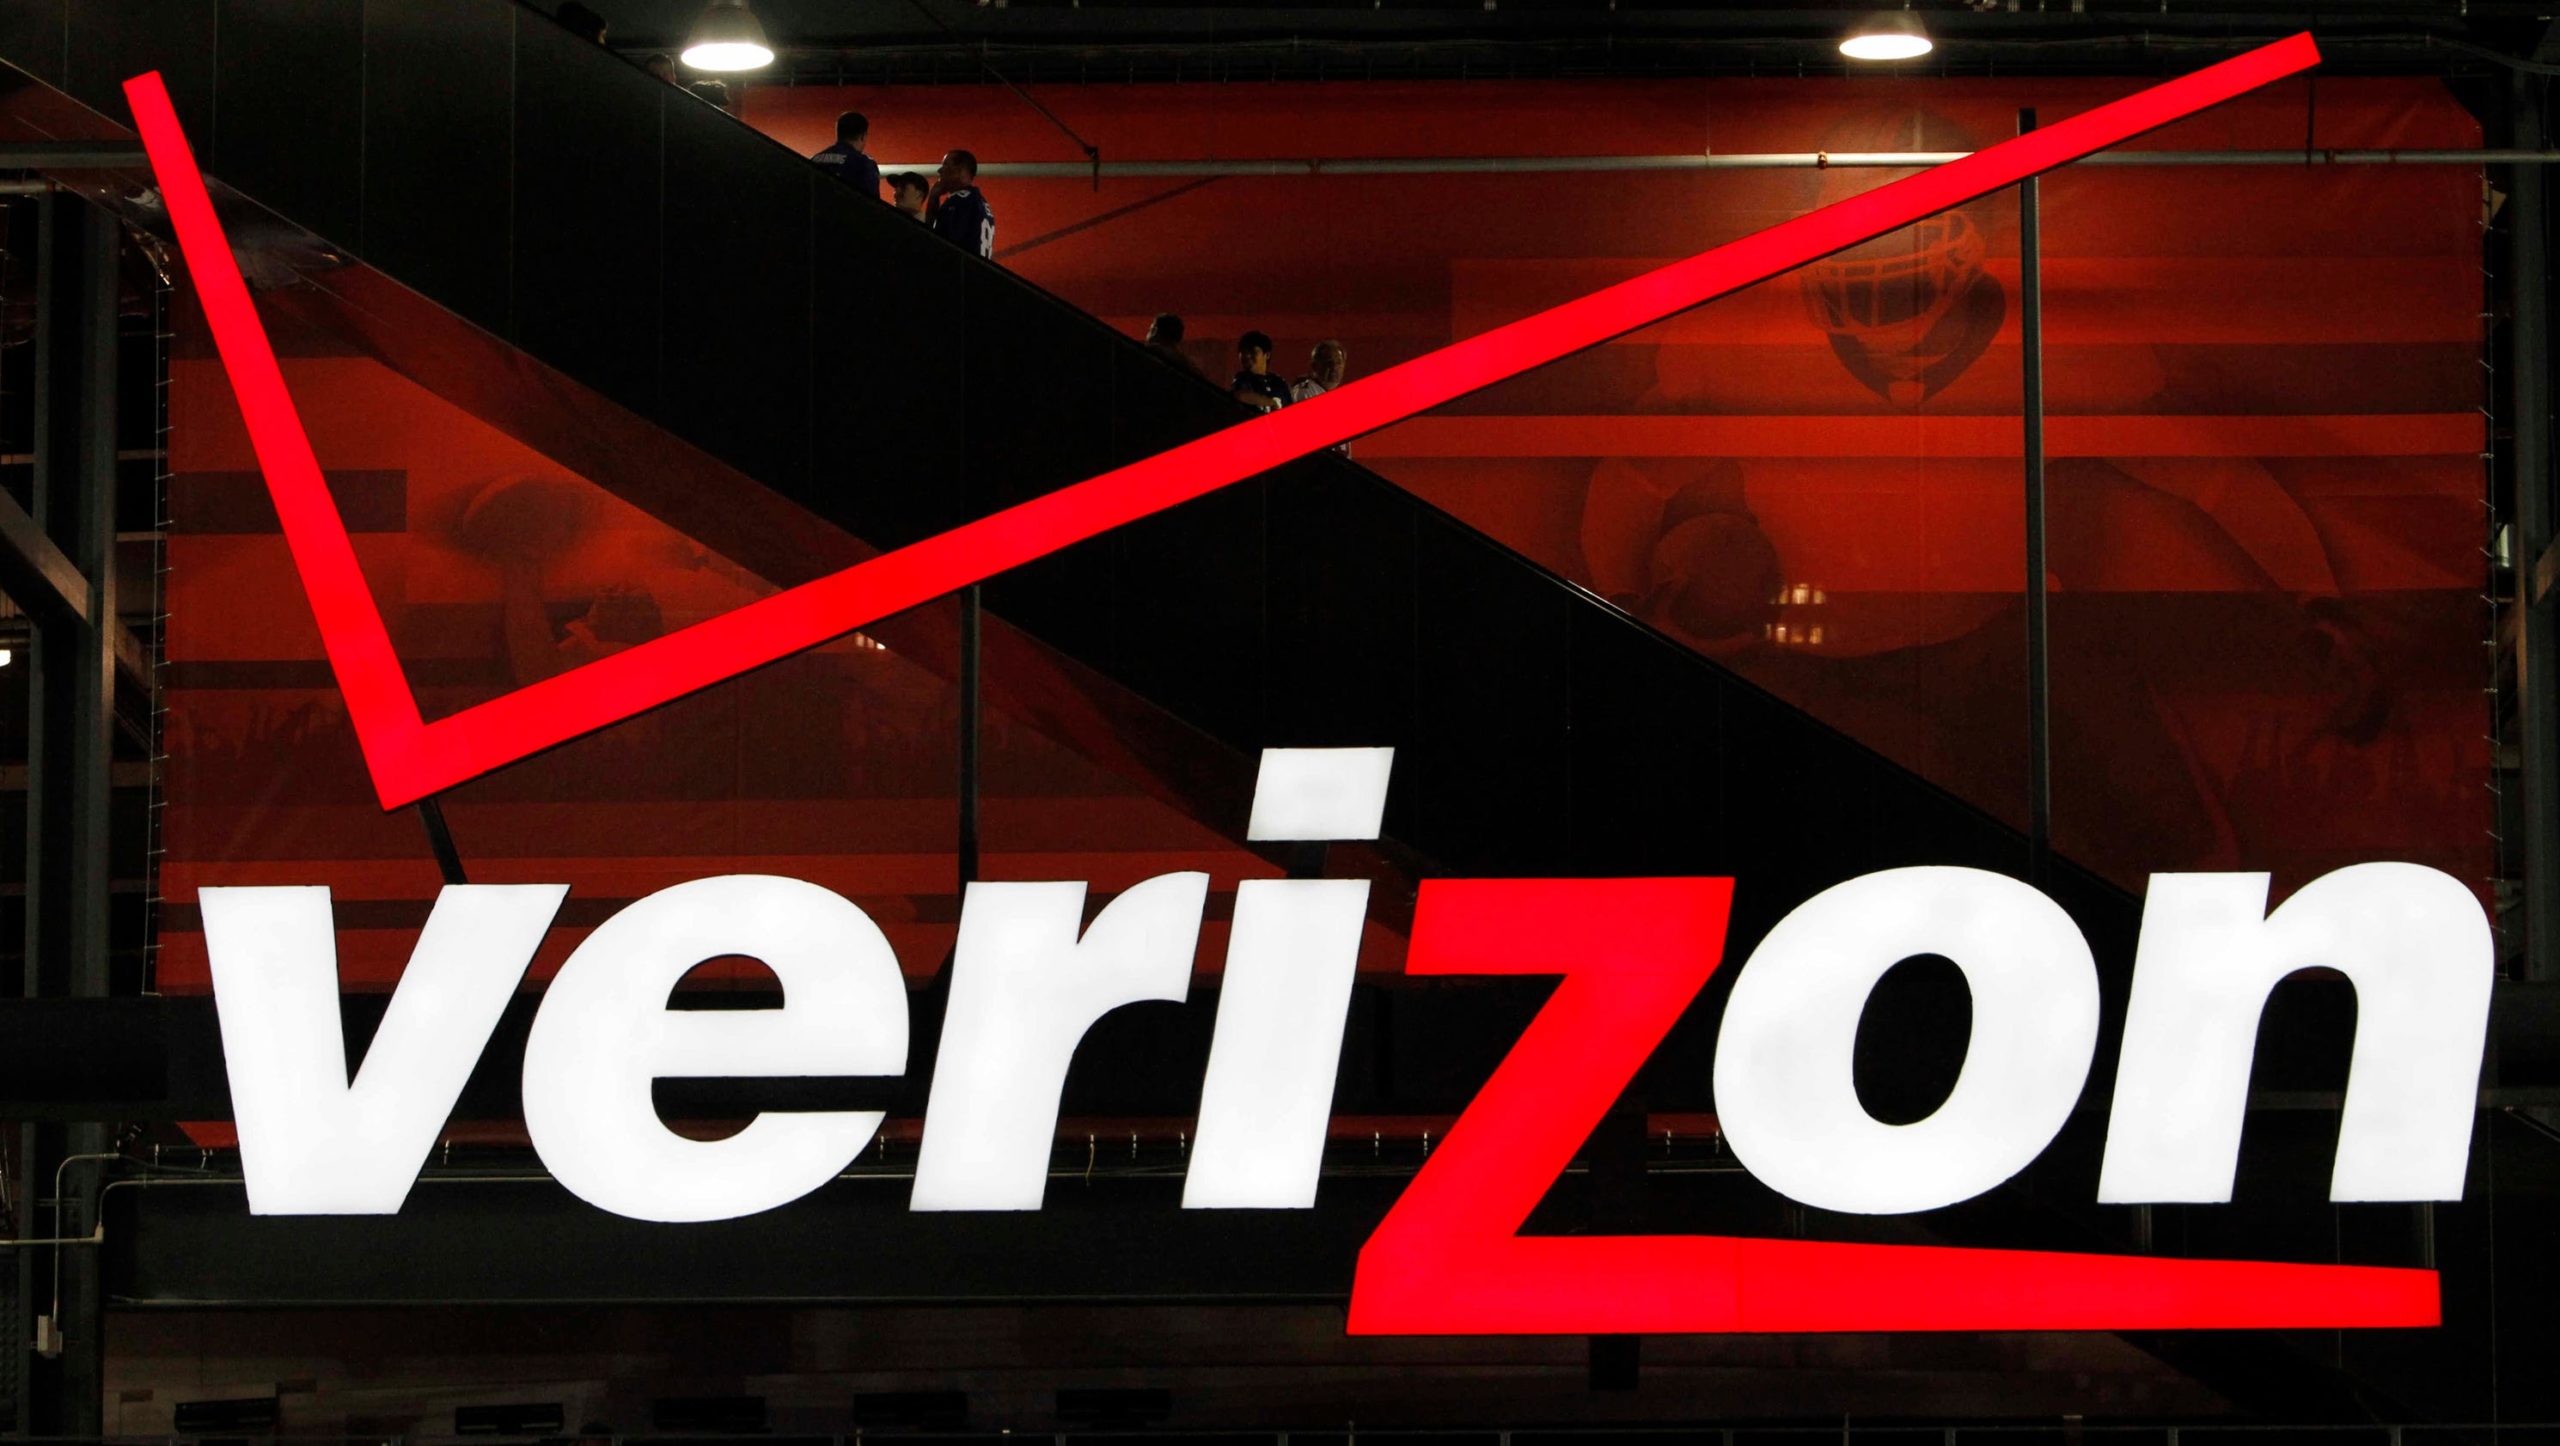 Who made the Verizon logo?